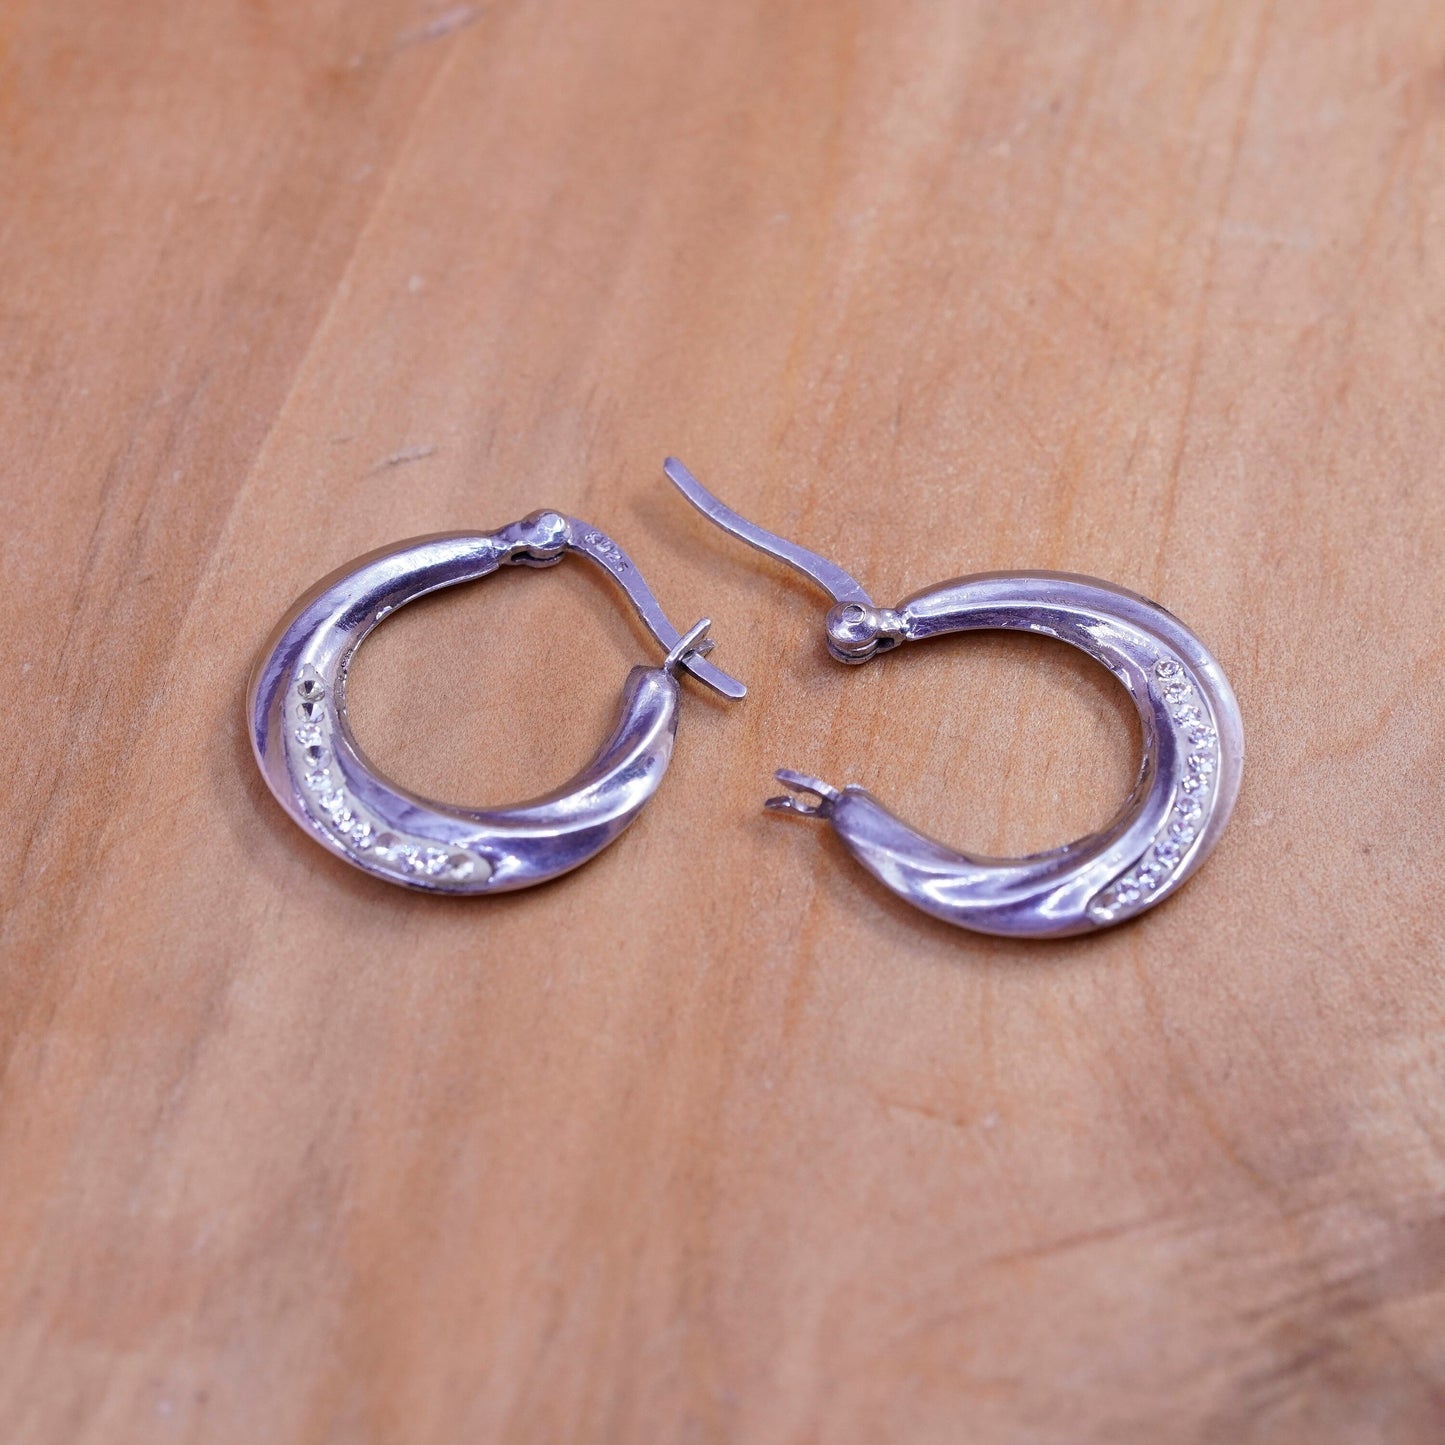 0.75”, Vintage Sterling silver handmade earrings, ribbed 925 hoops with cz